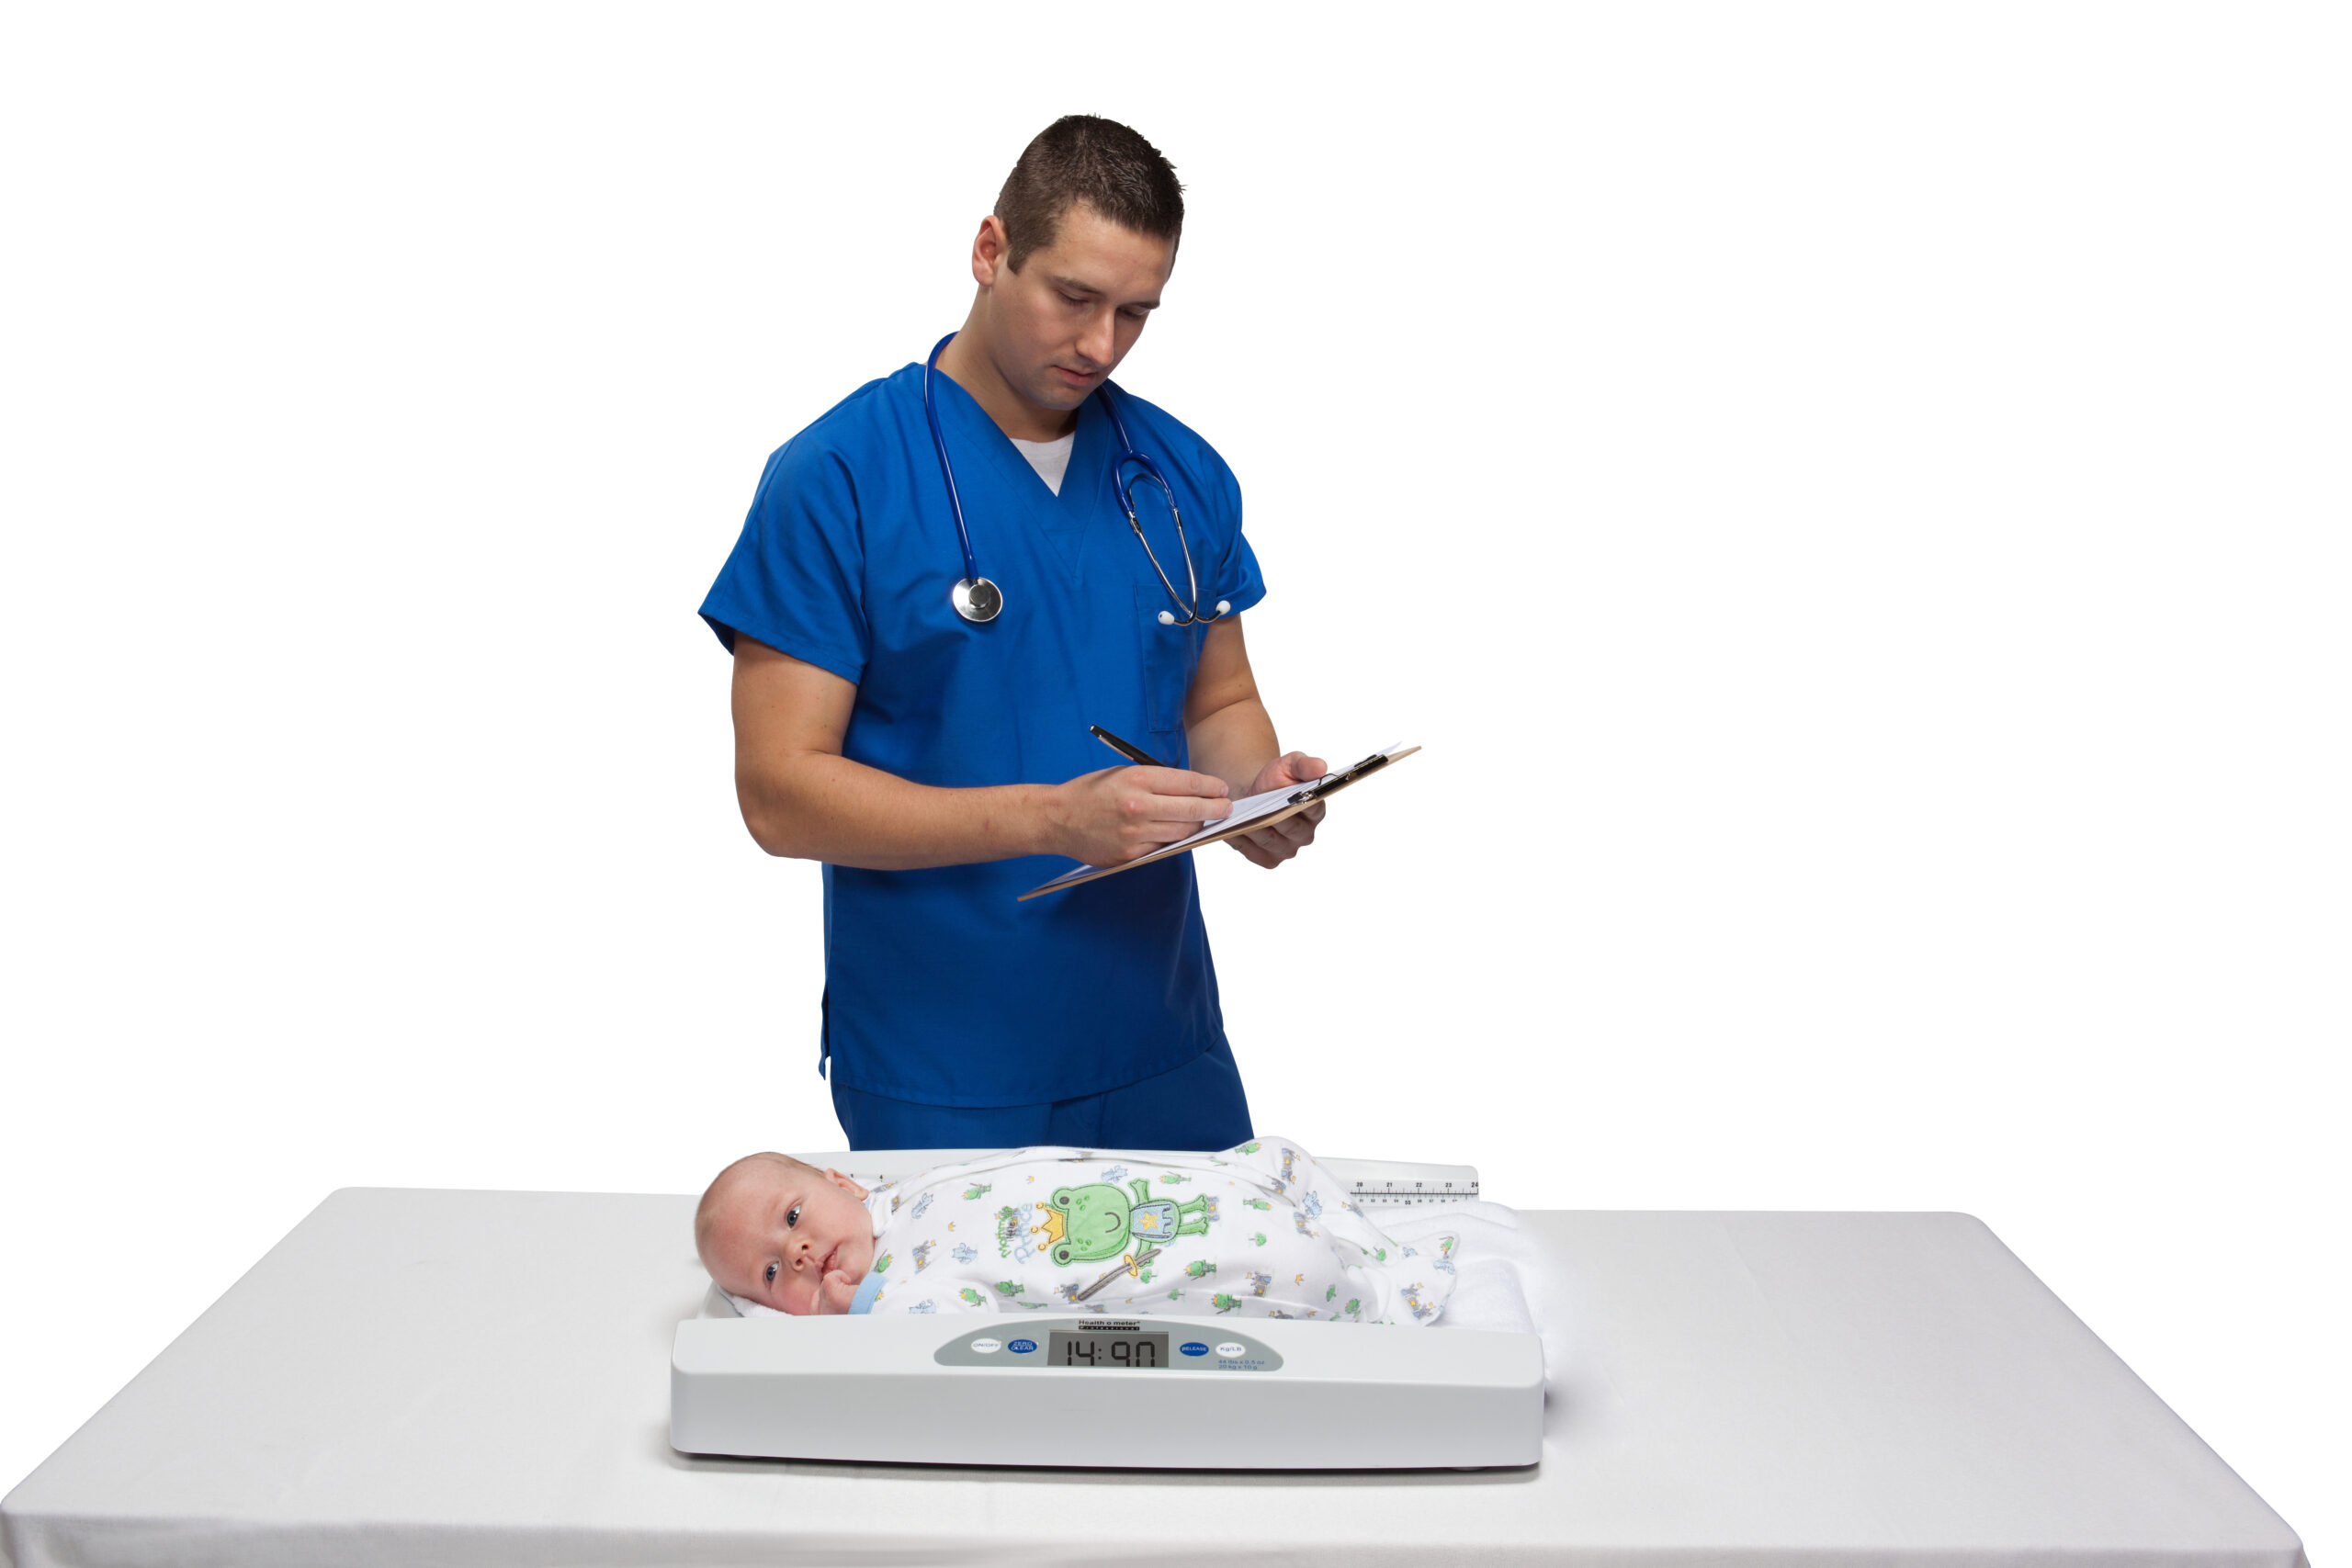 Health O Meter Digital Pediatric/Infant Scale: 2210KL - Venture